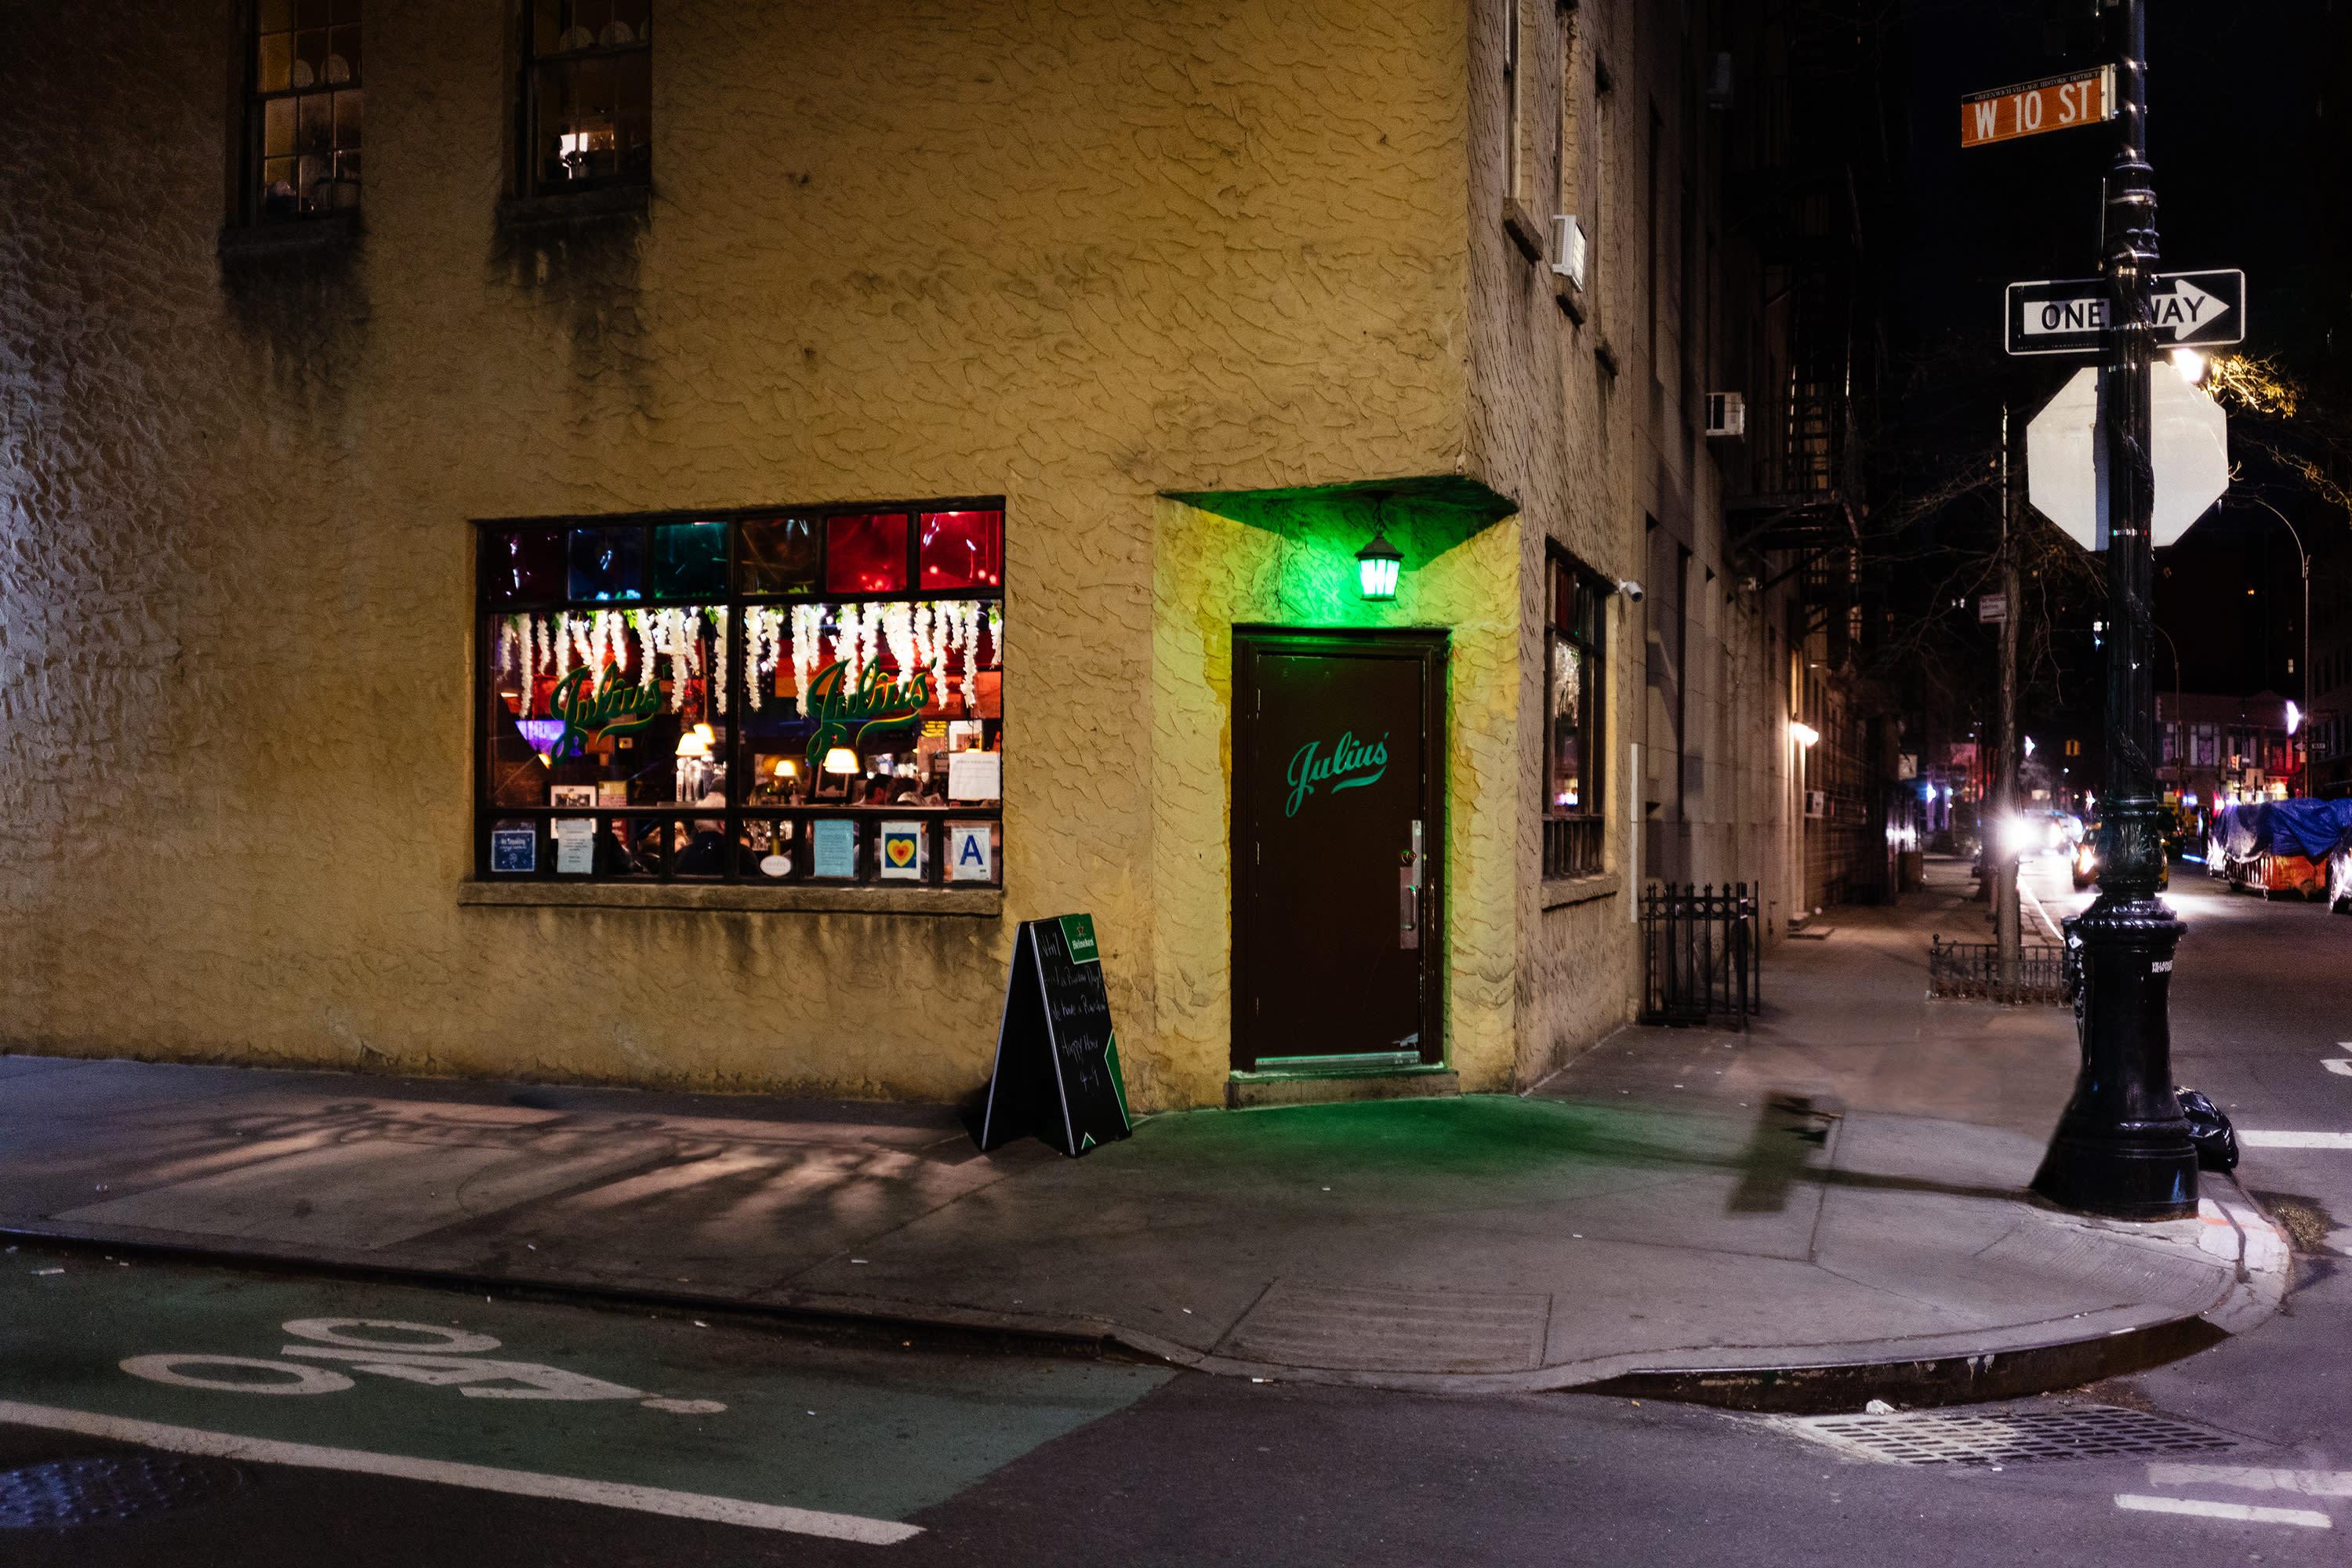 julius bar, west village, manhattan, NYC, LGBTQ, portraits, nightlife